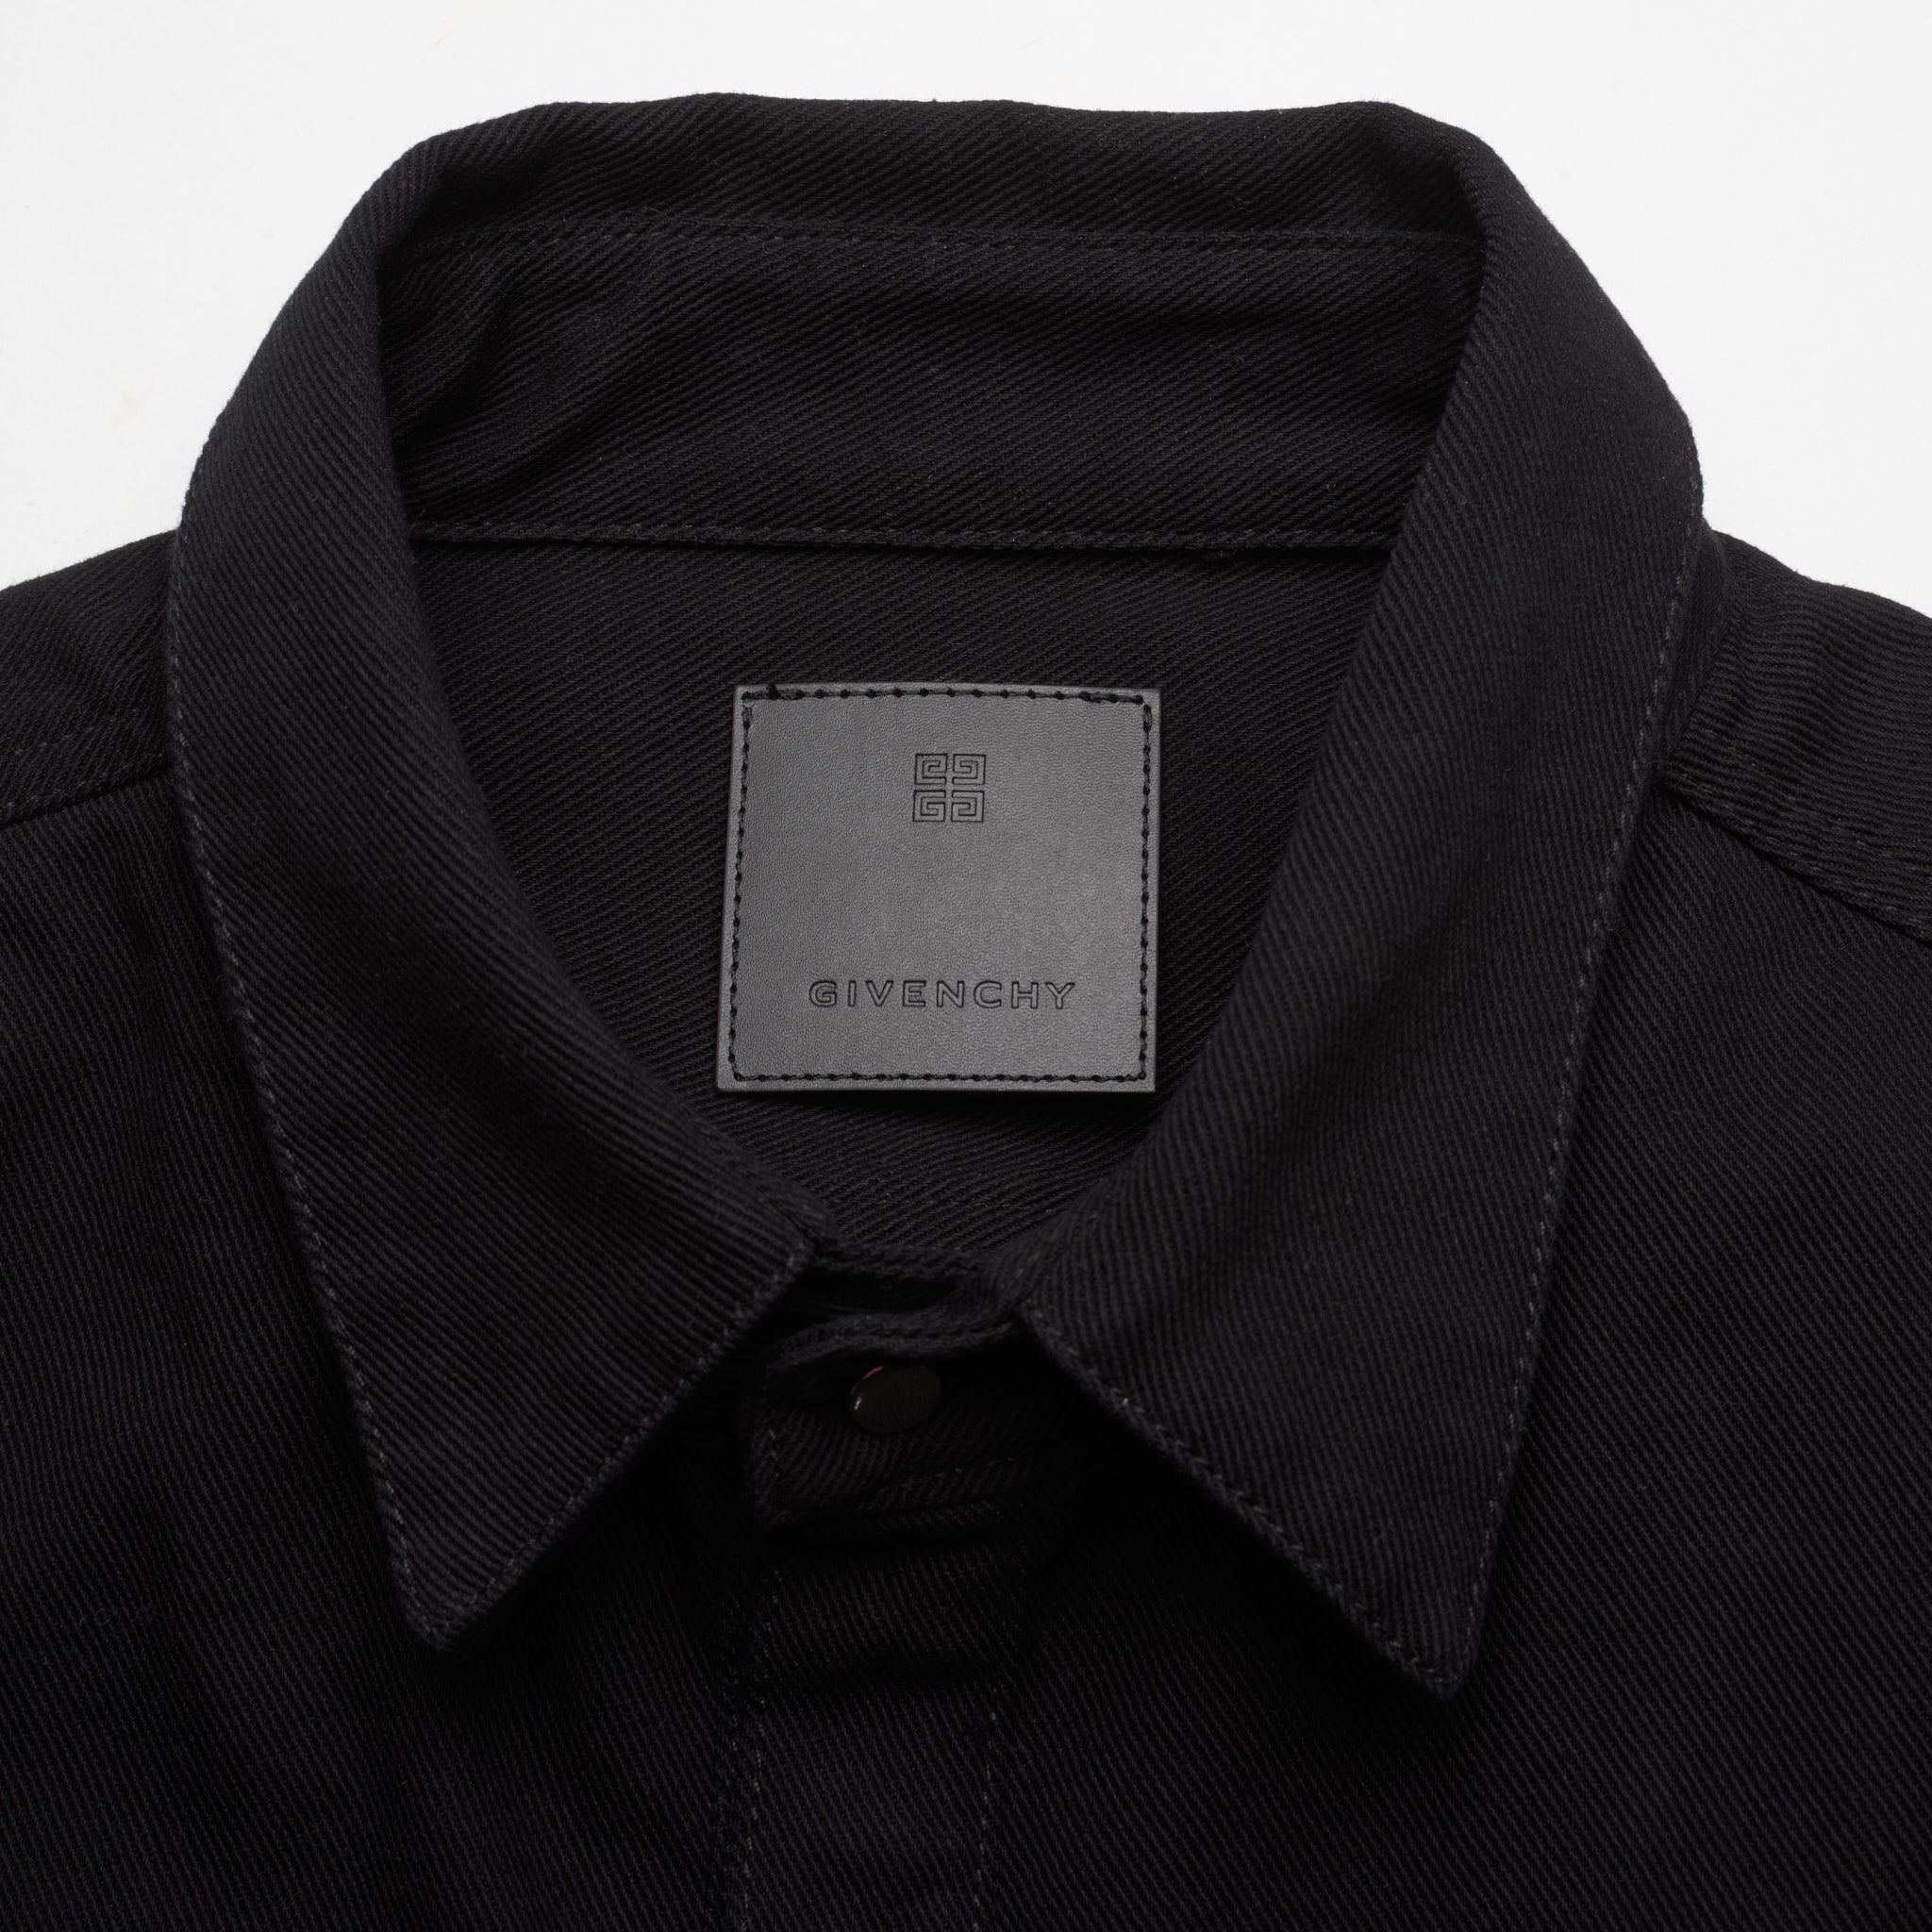 Details more than 50 new look black denim shirt super hot